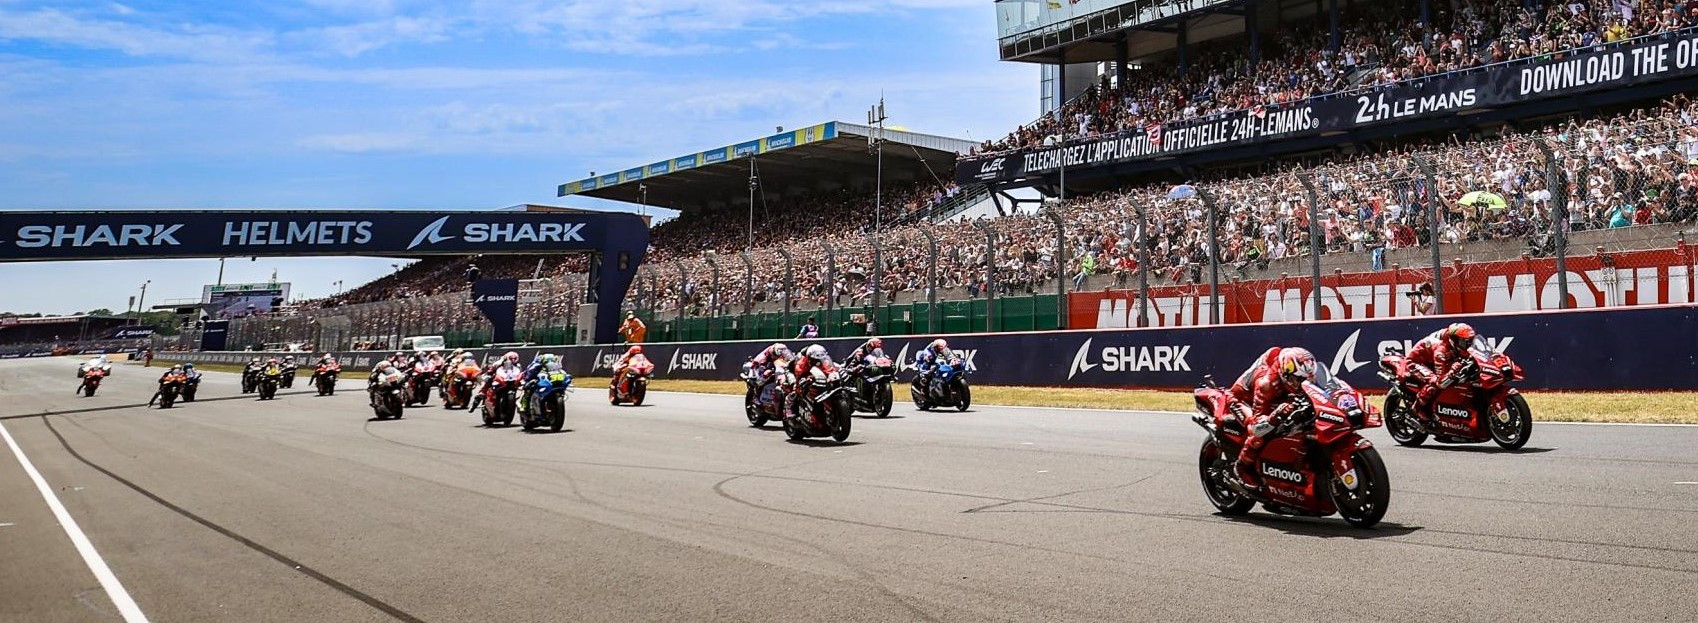 The Bugatti Circuit in Le Mans, France, will host the 1000th motorcycle Grand Prix. Photo courtesy Dorna.